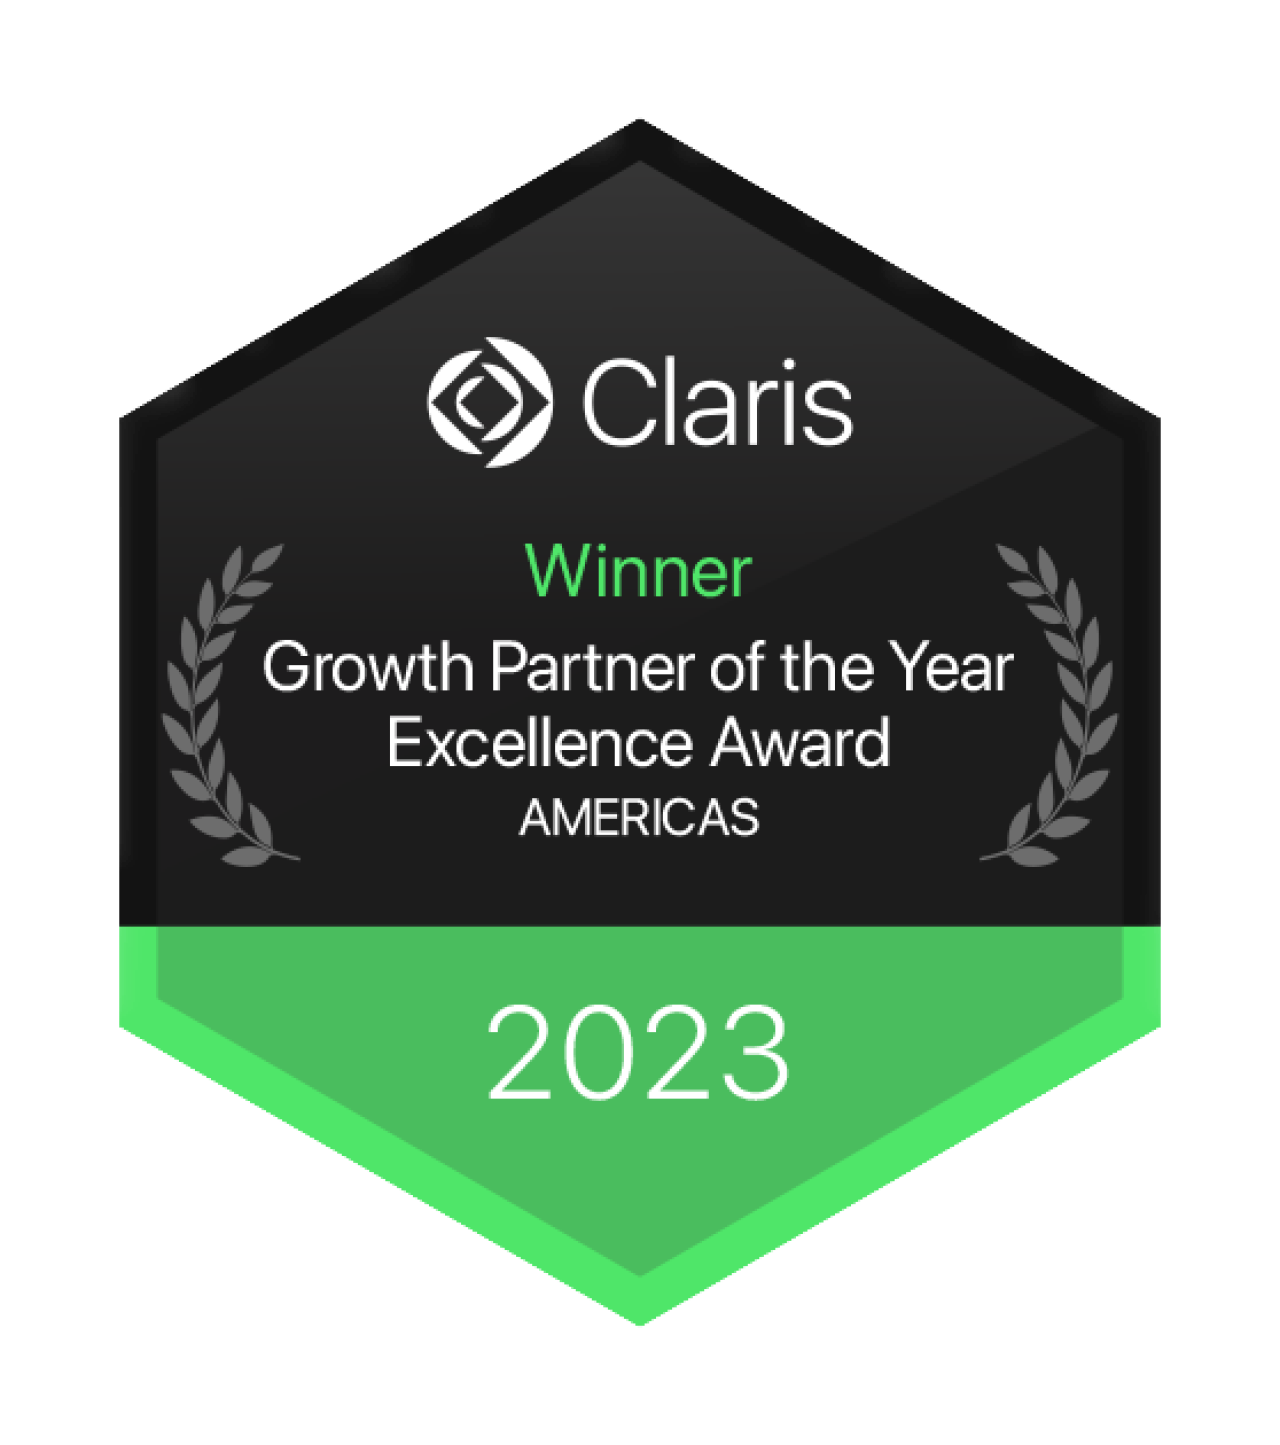 claris award winner growth partner americas 2023 db services.